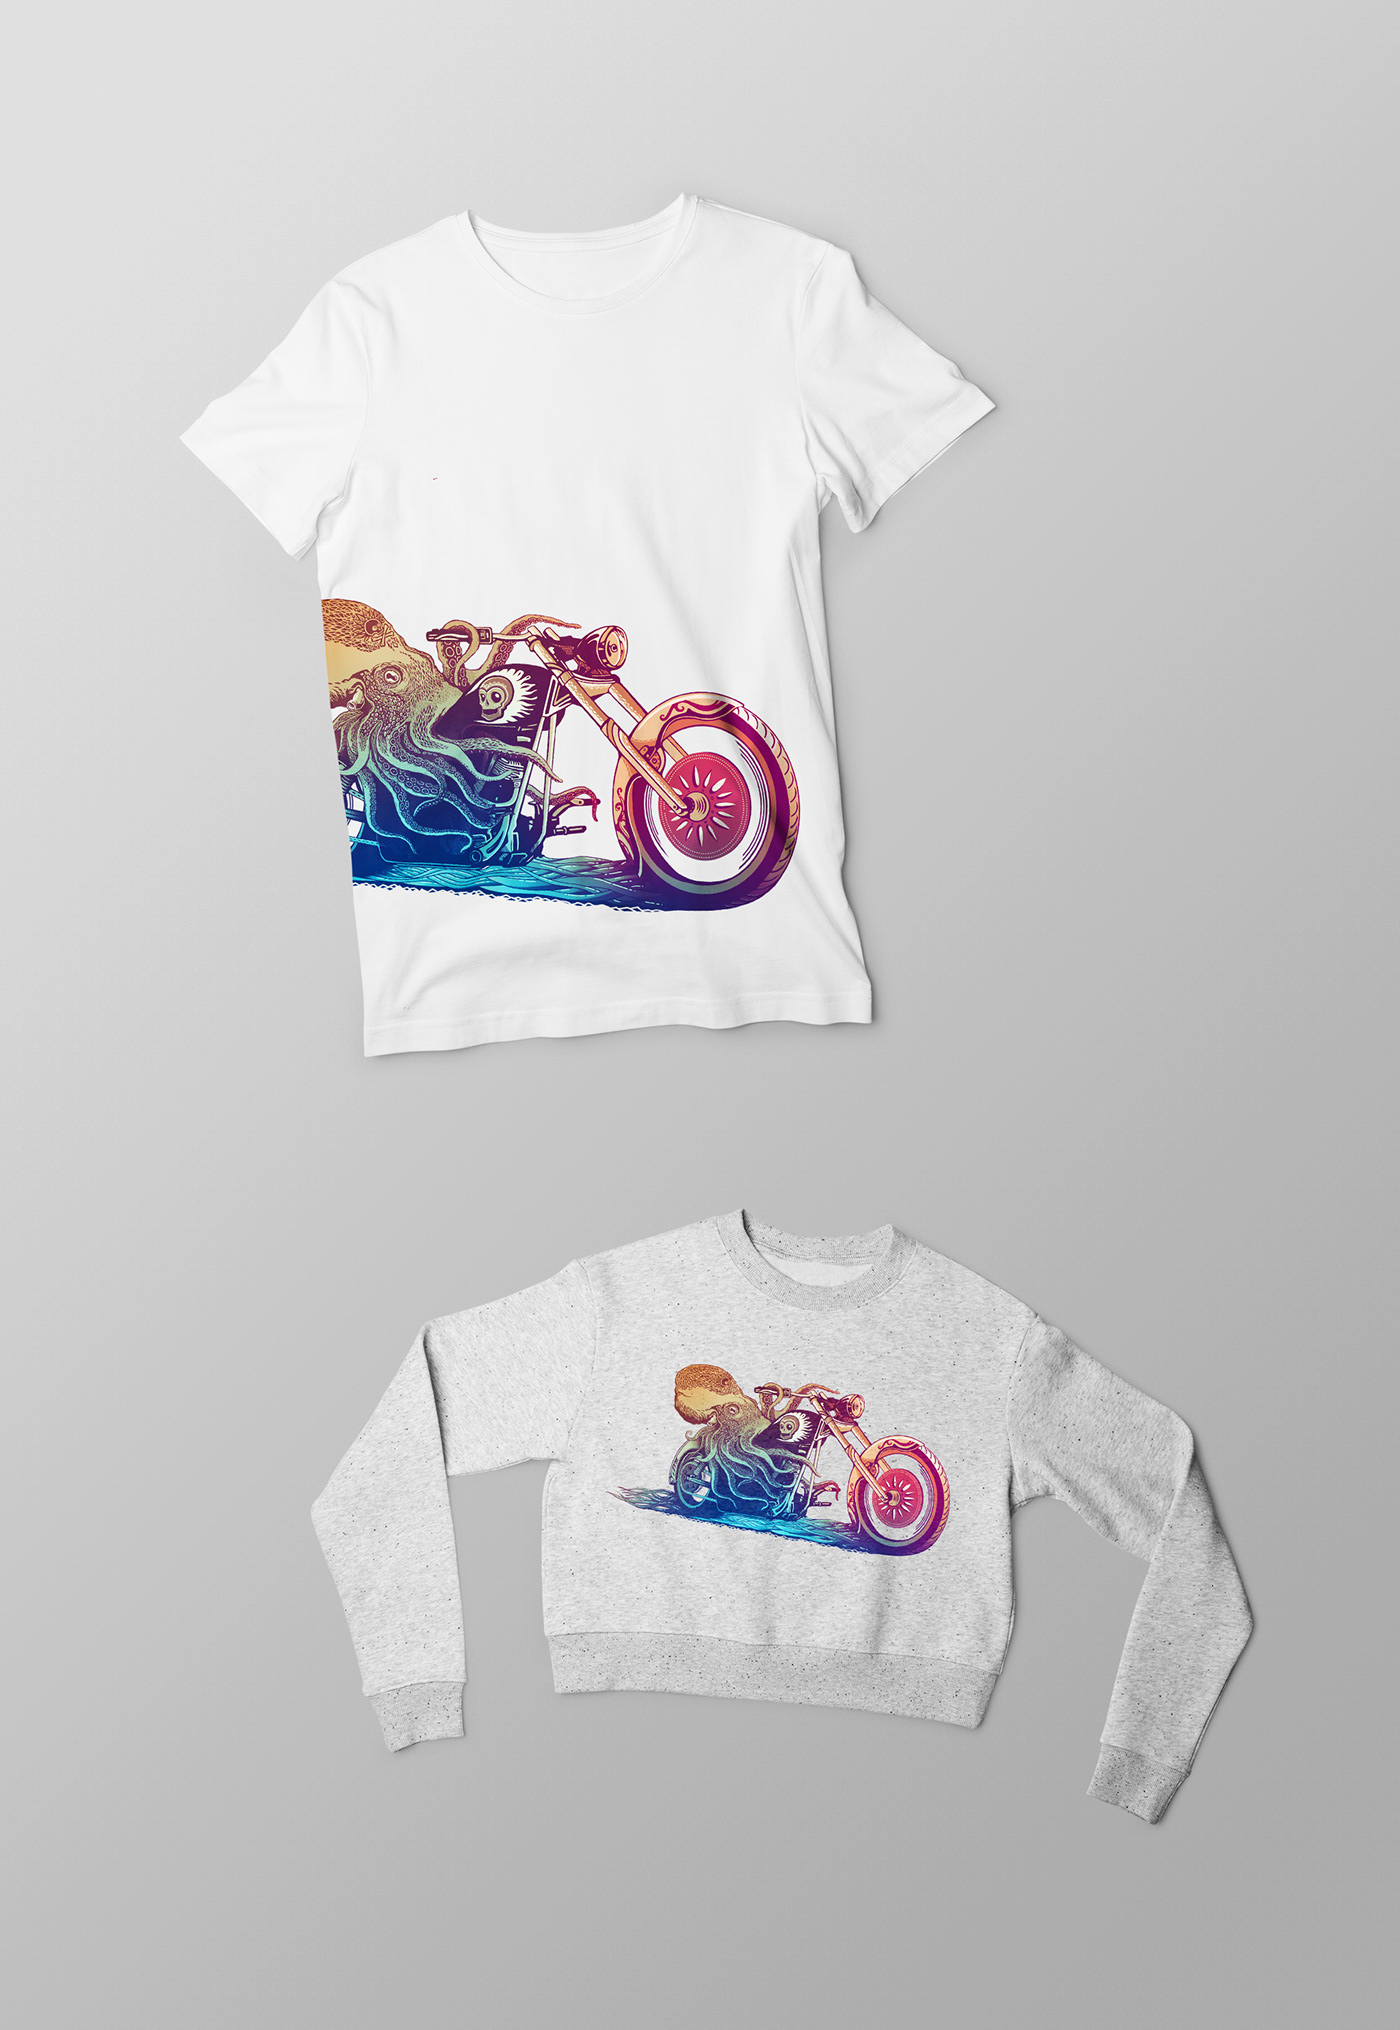 t-shirt octopus chopper print Clothing characters illustrations